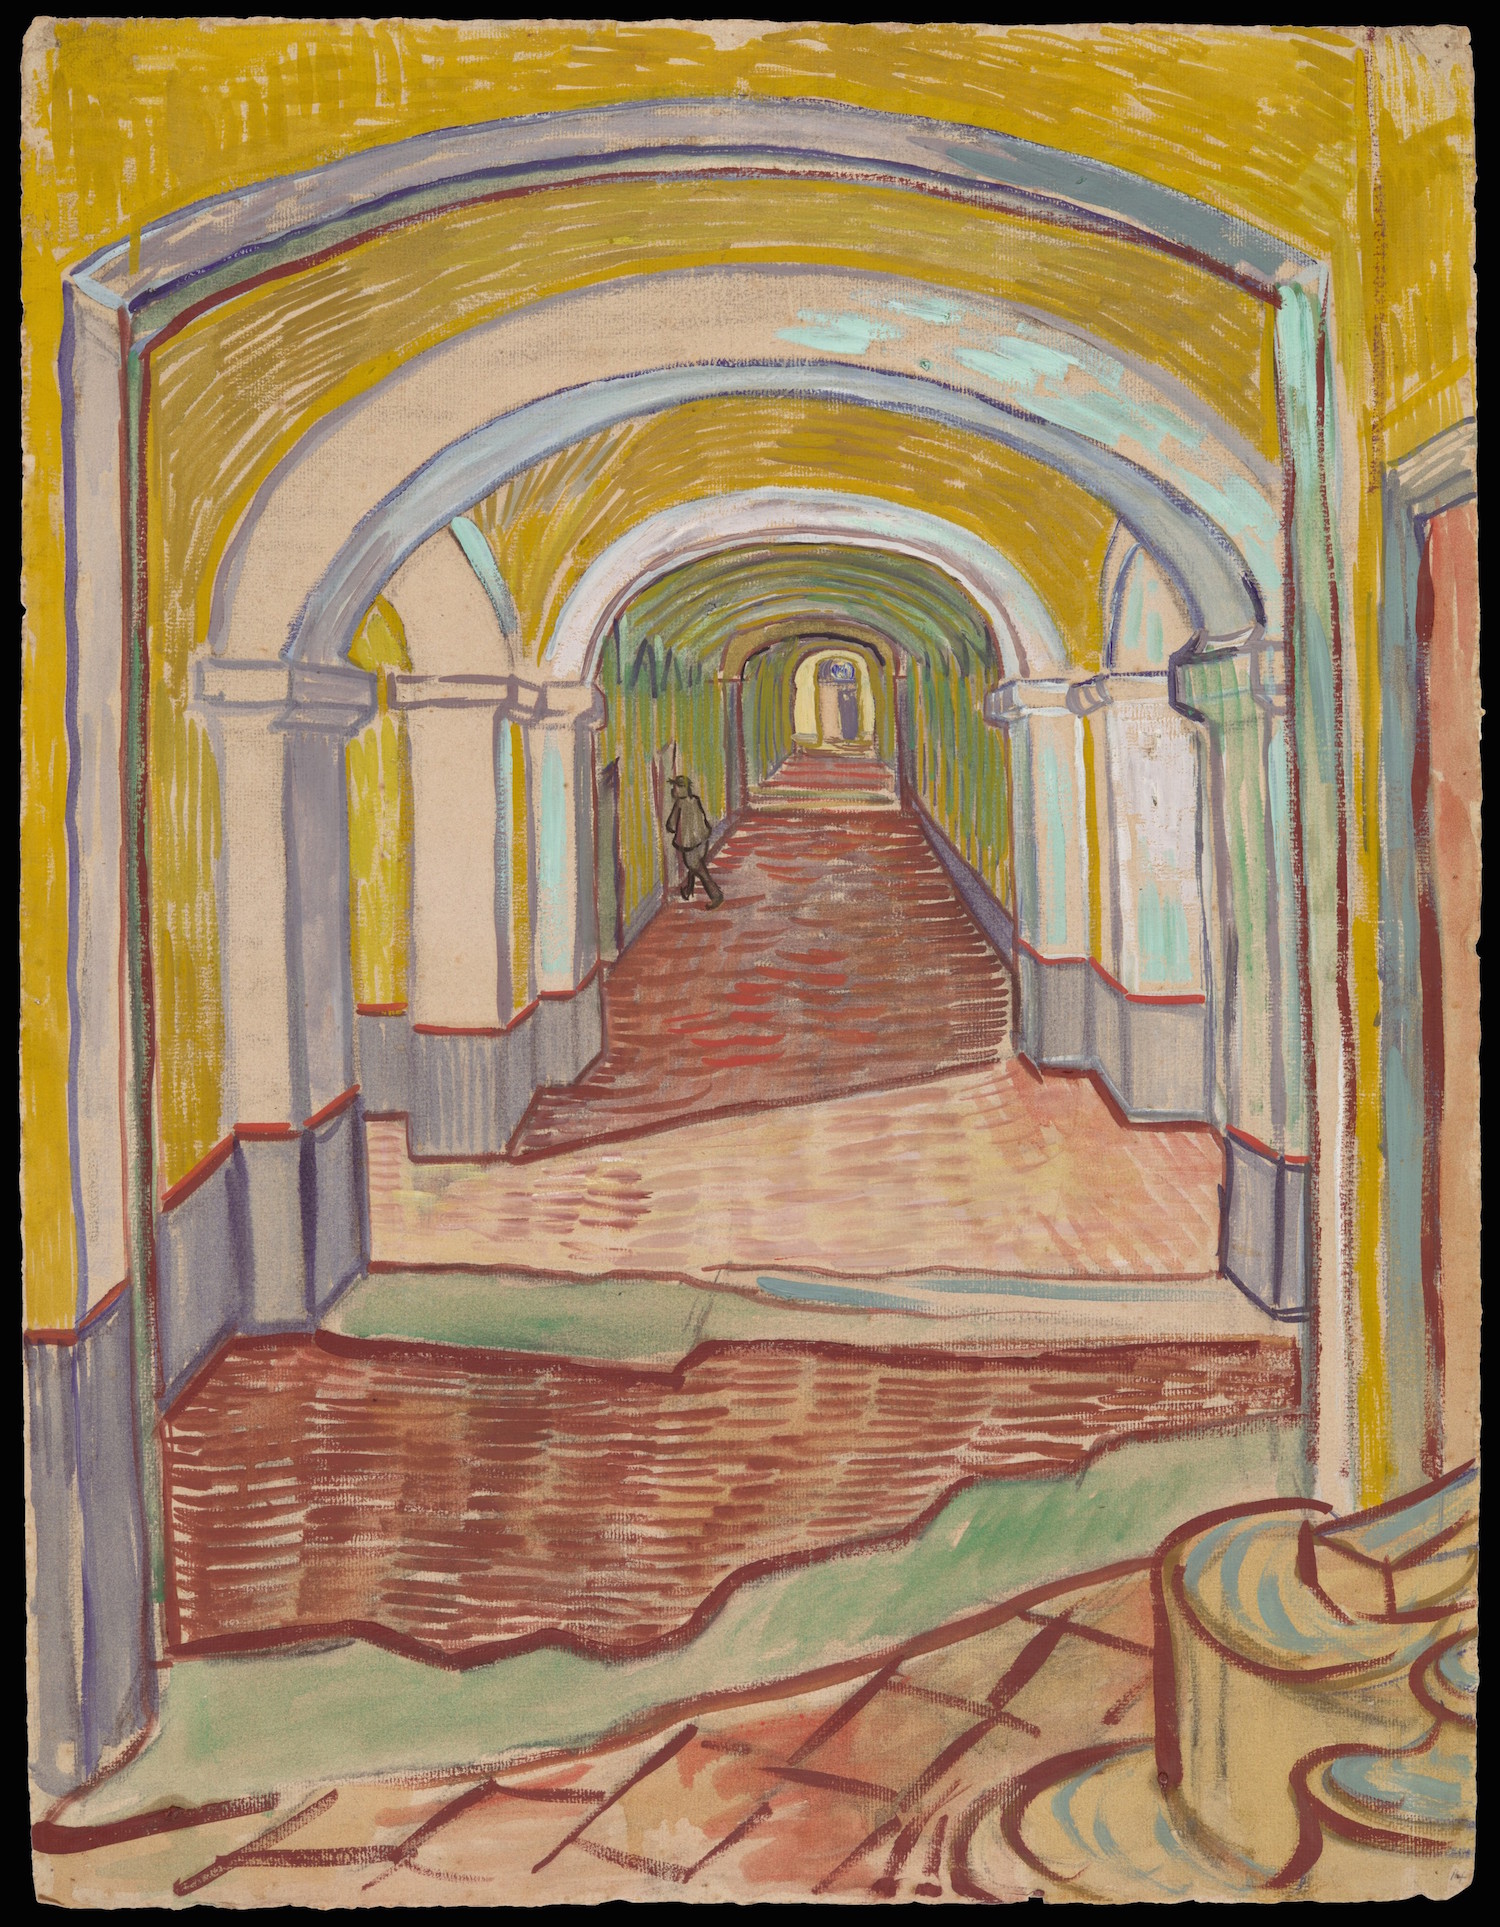 Corridor in the Asylum by Vincent van Gogh - 1889 - 65.1 x 49.1 cm Metropolitan Museum of Art